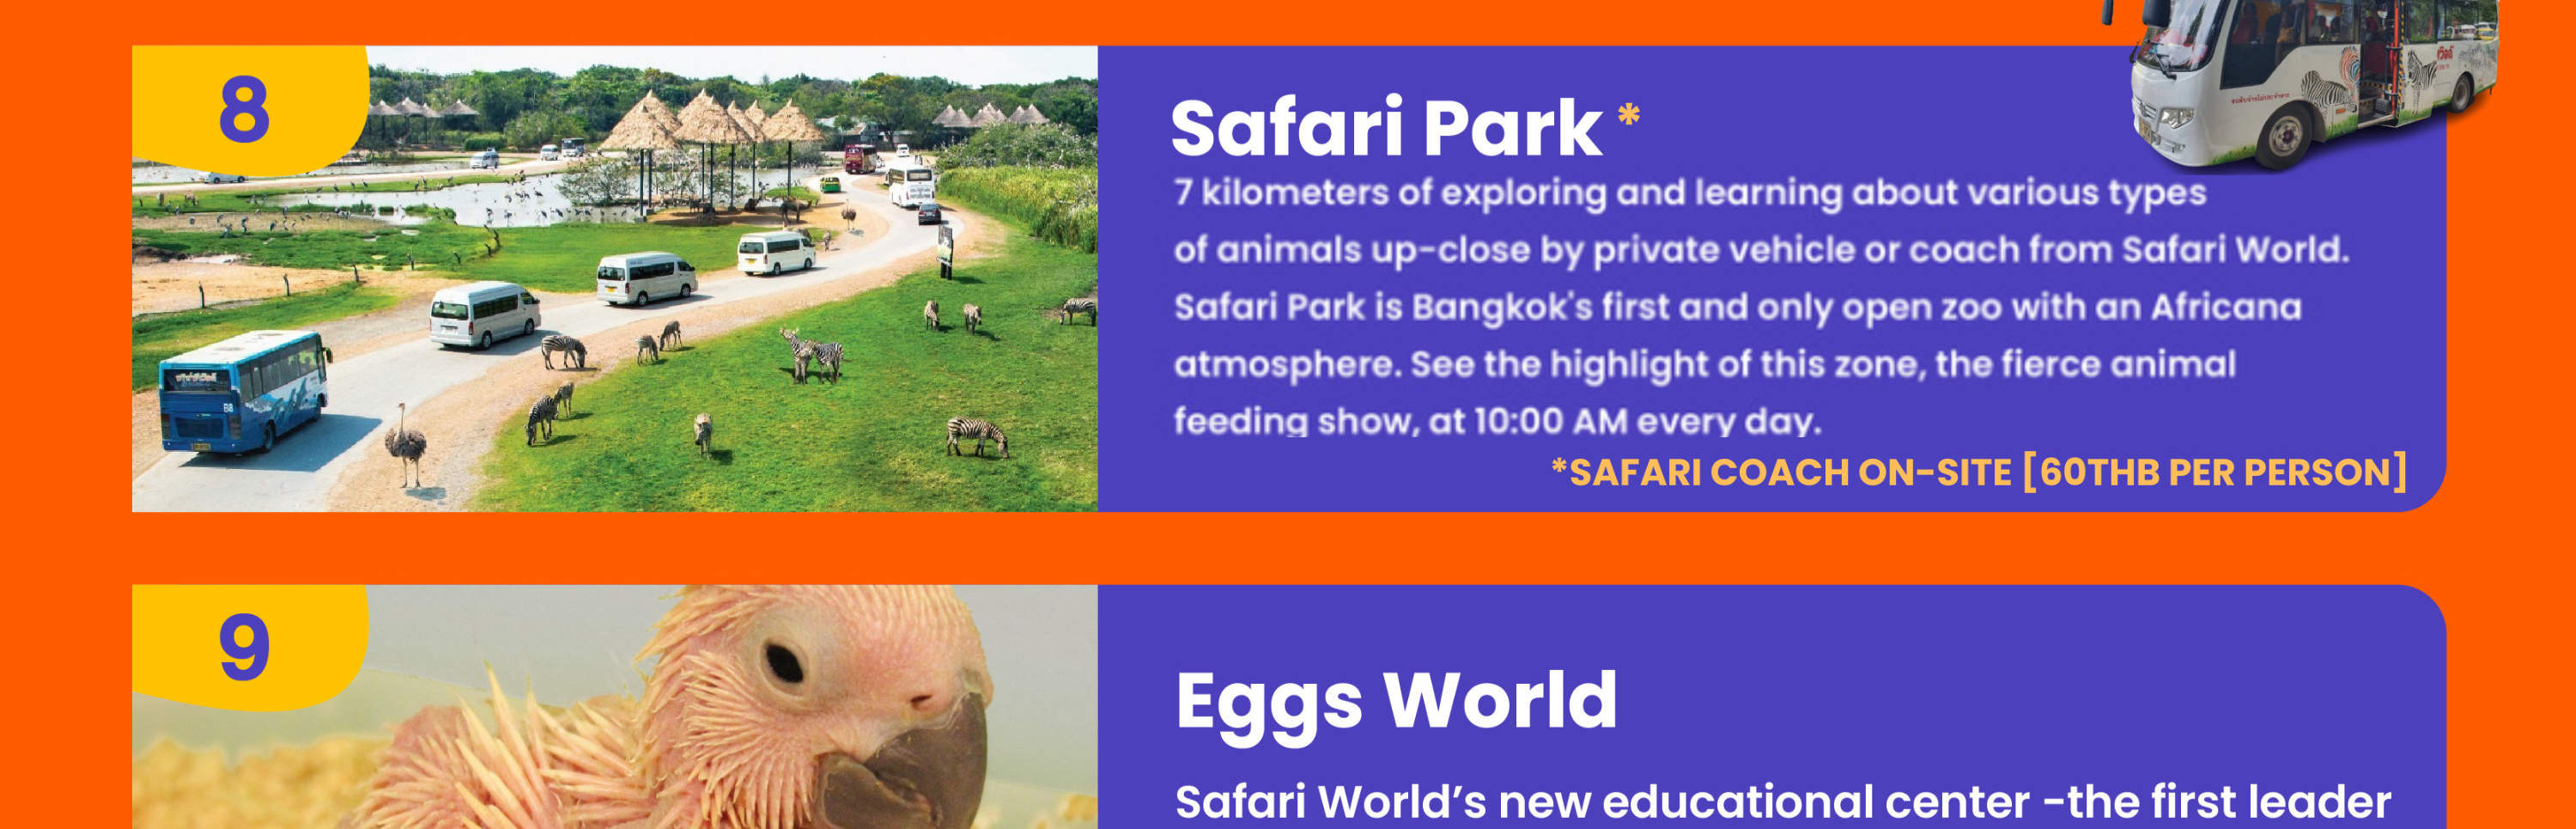 safari world tickets online